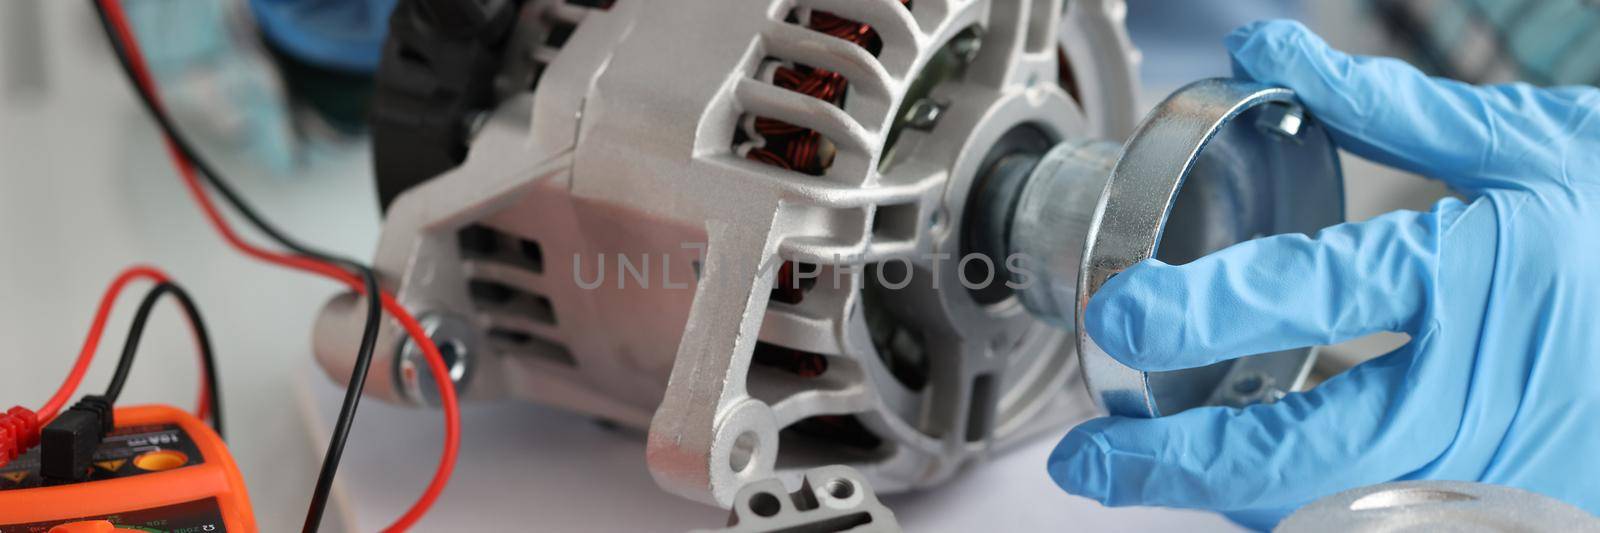 Replacement and testing of alternator and diagnostic equipment closeup. Car parts diagnostics concept